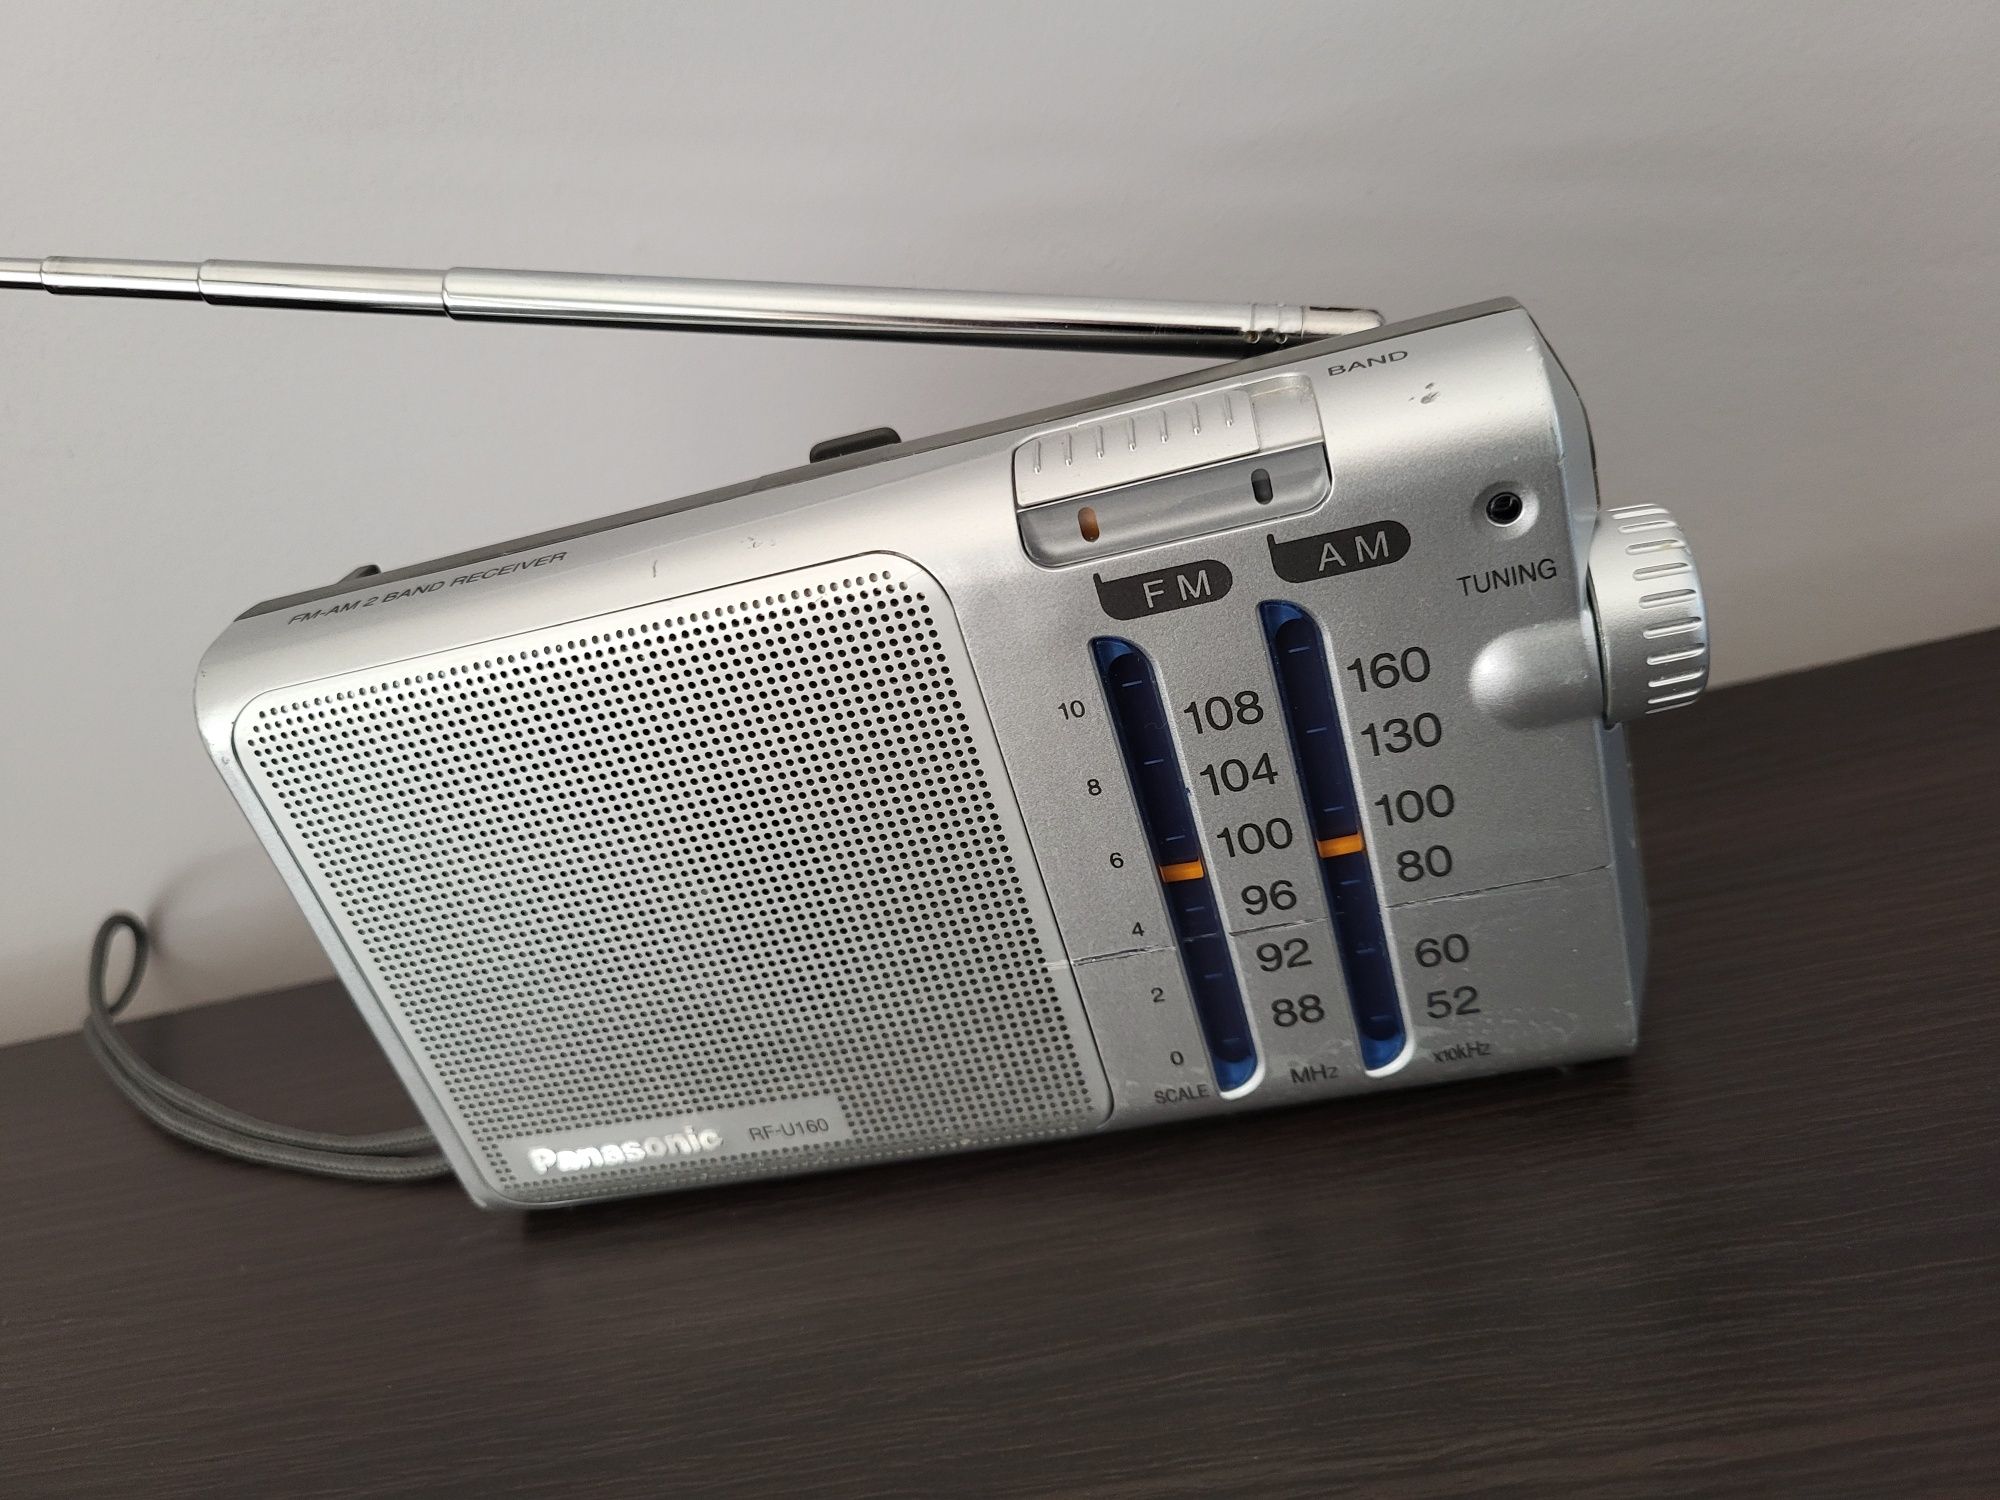 radio Panasonic RF-U160 przenośne